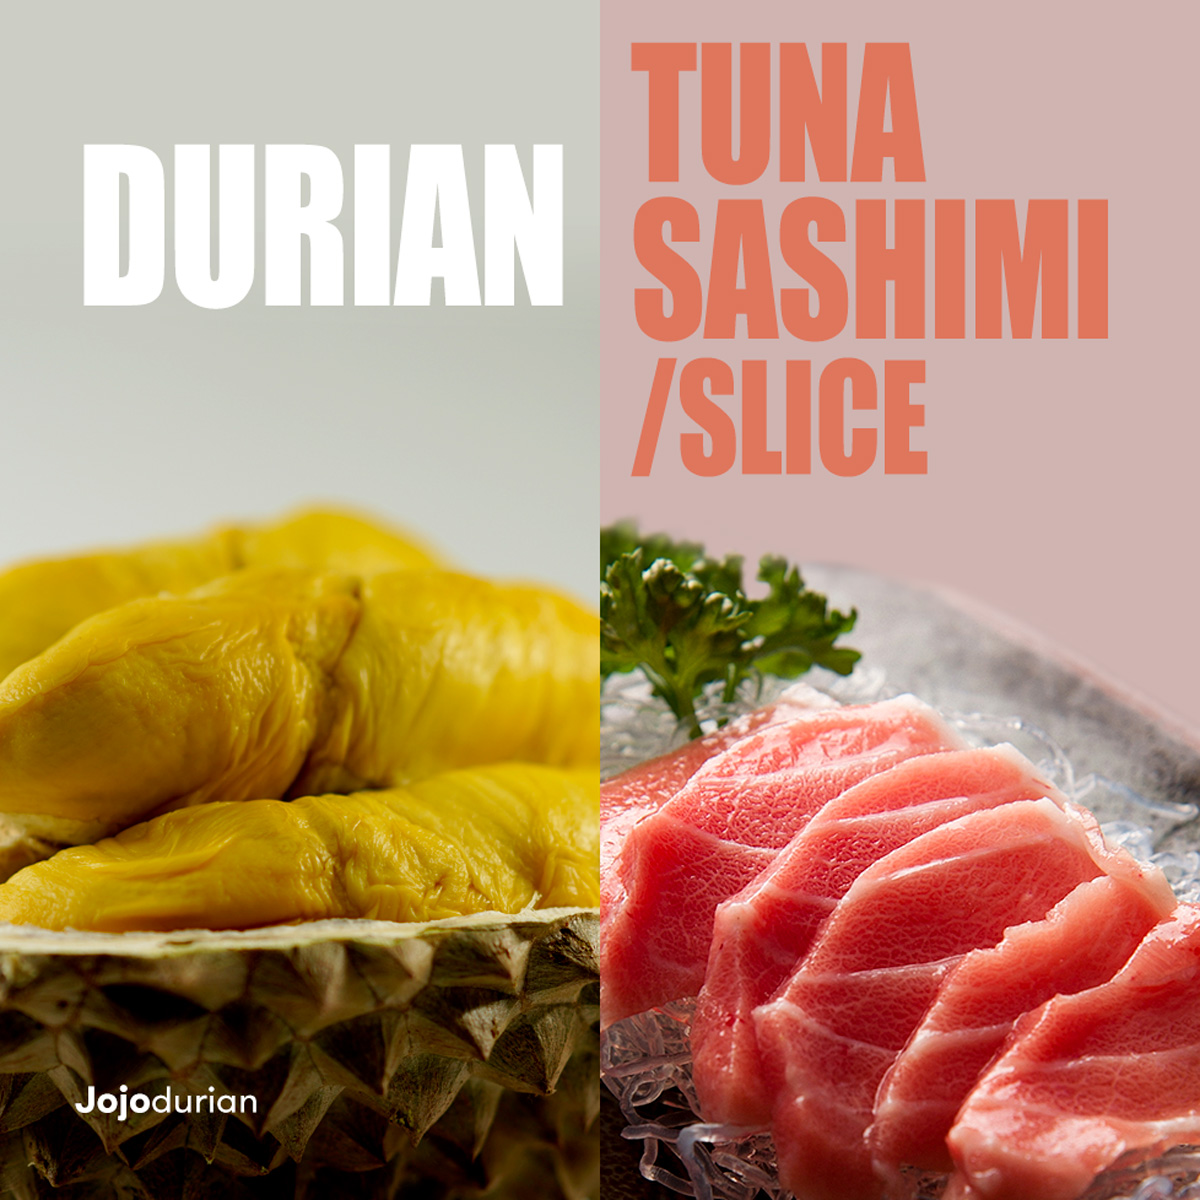 Meal Replacement: Durian vs Tuna Sashimi